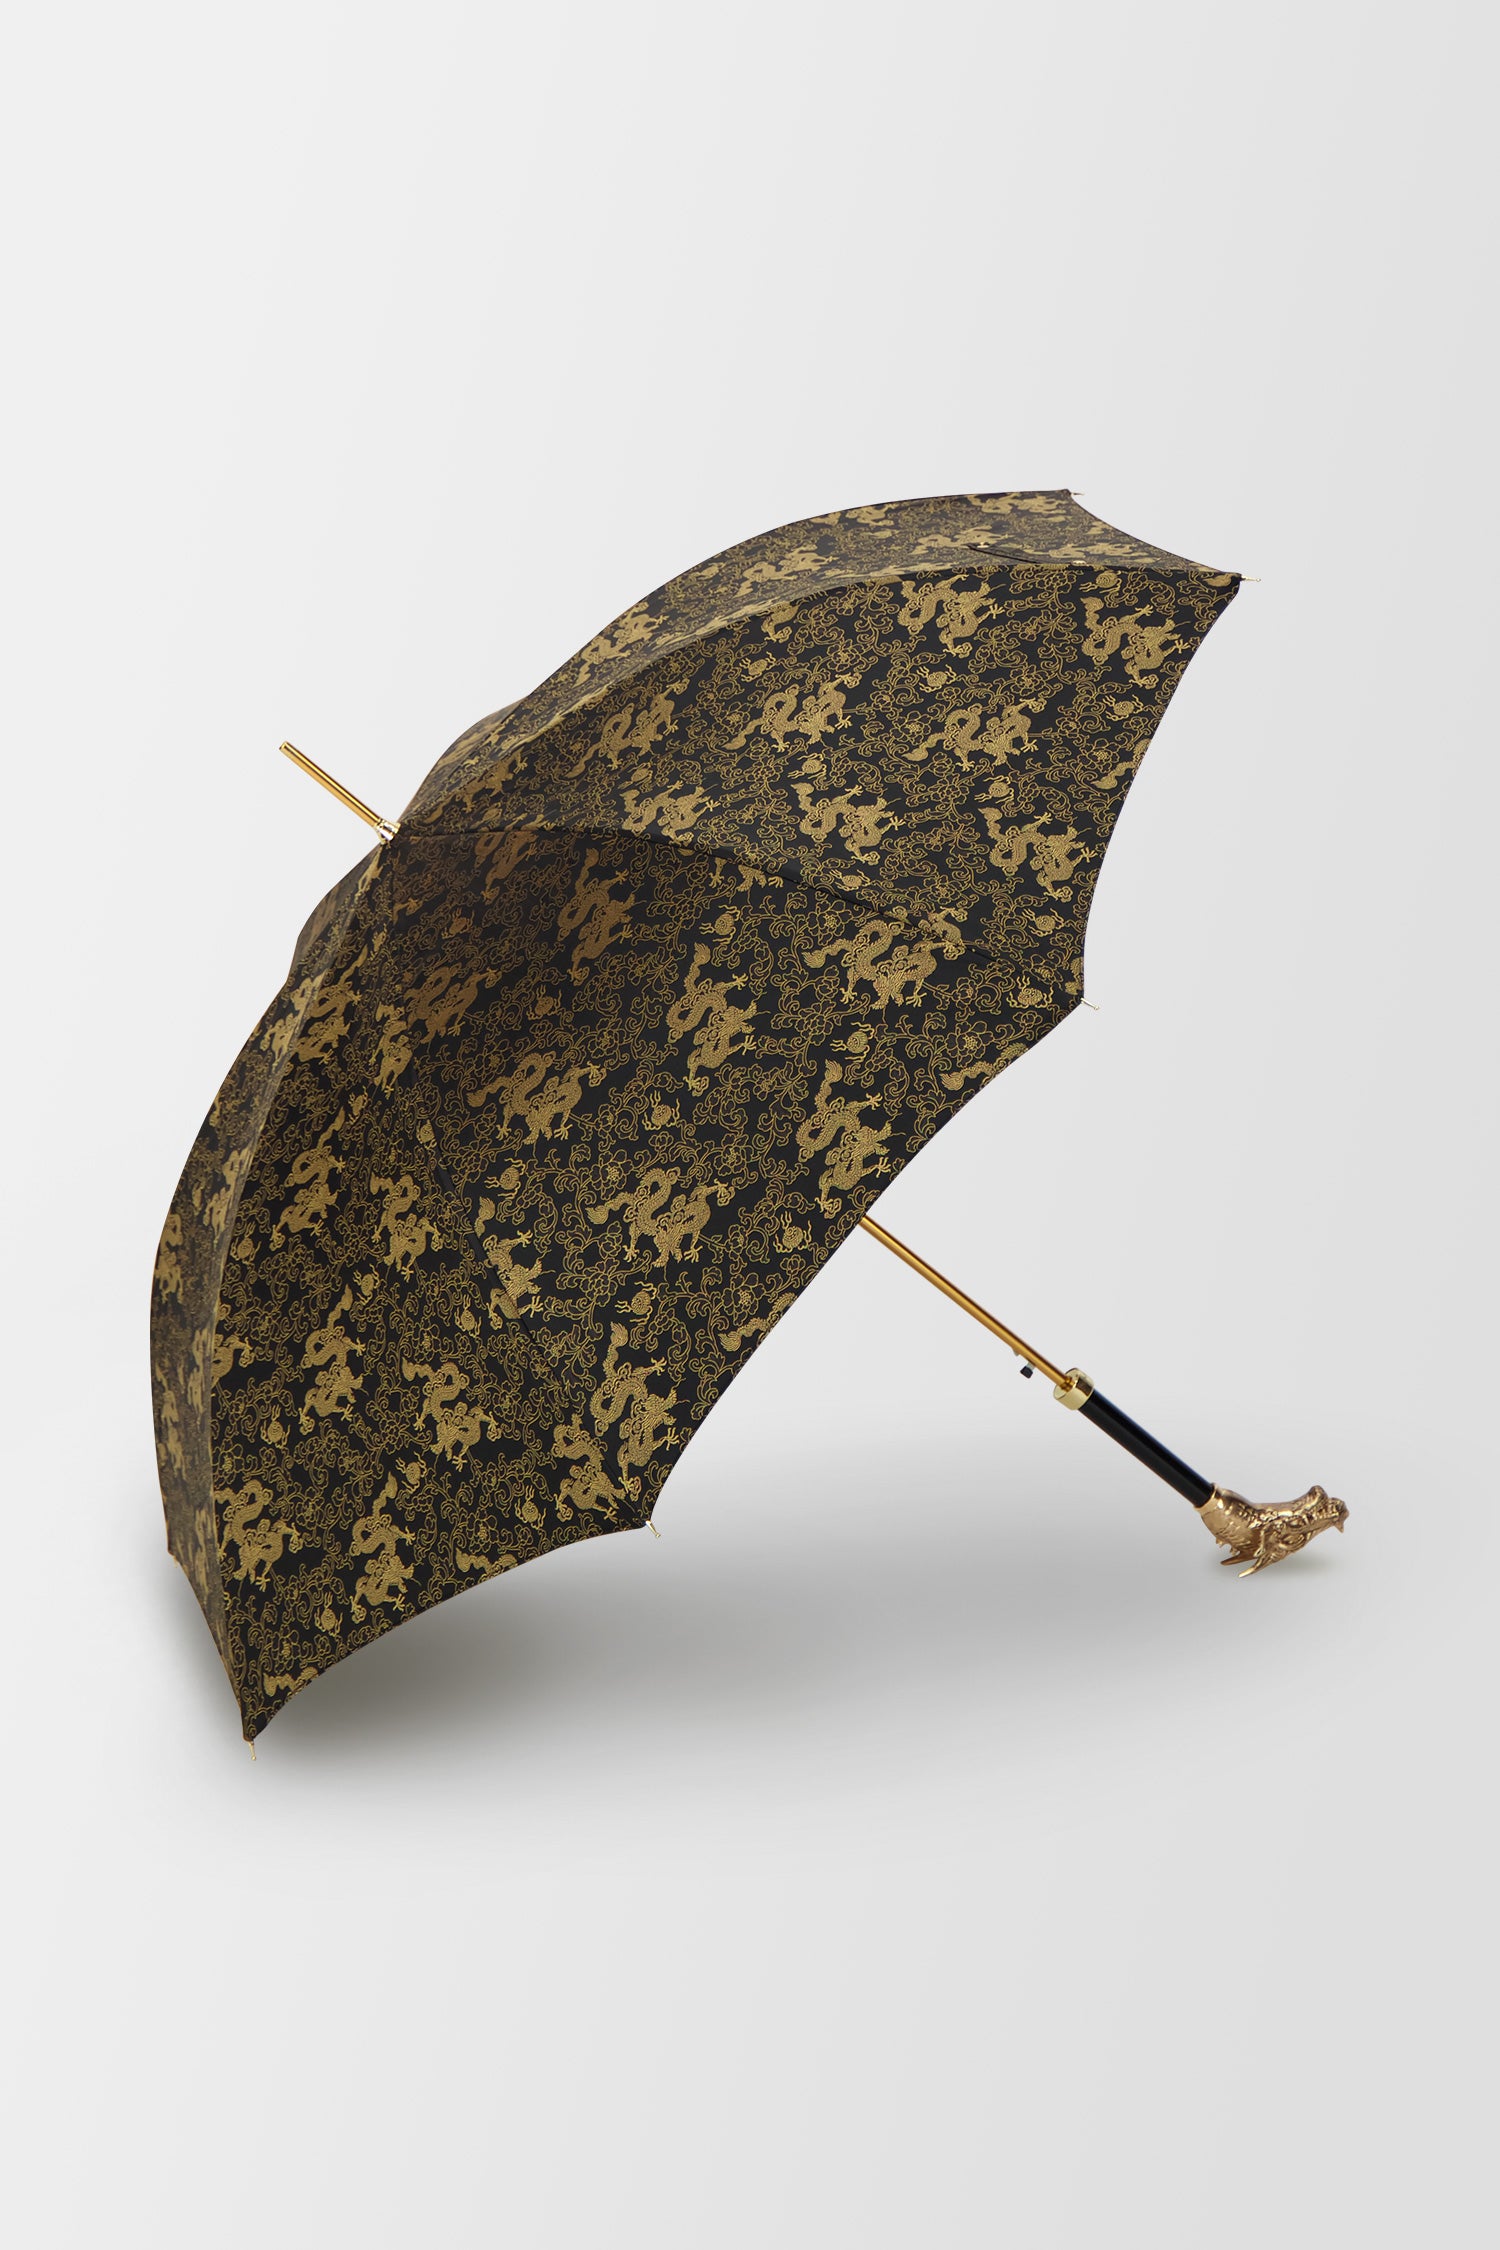 Pasotti Golden Dragon Umbrella